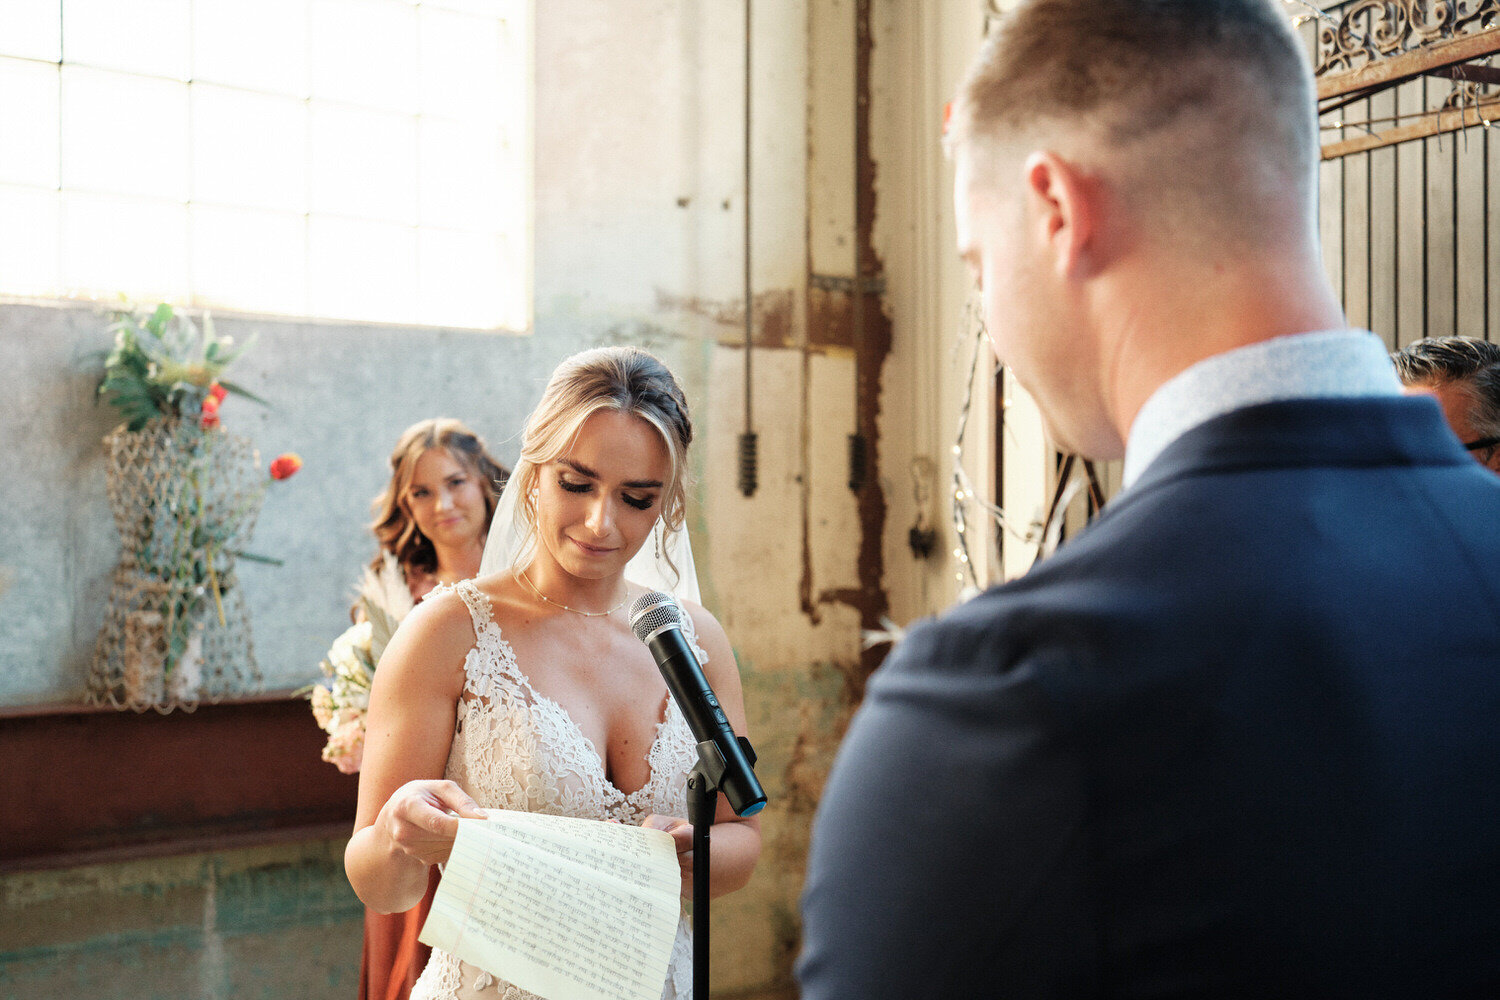 An emotional bride reads her wedding vows